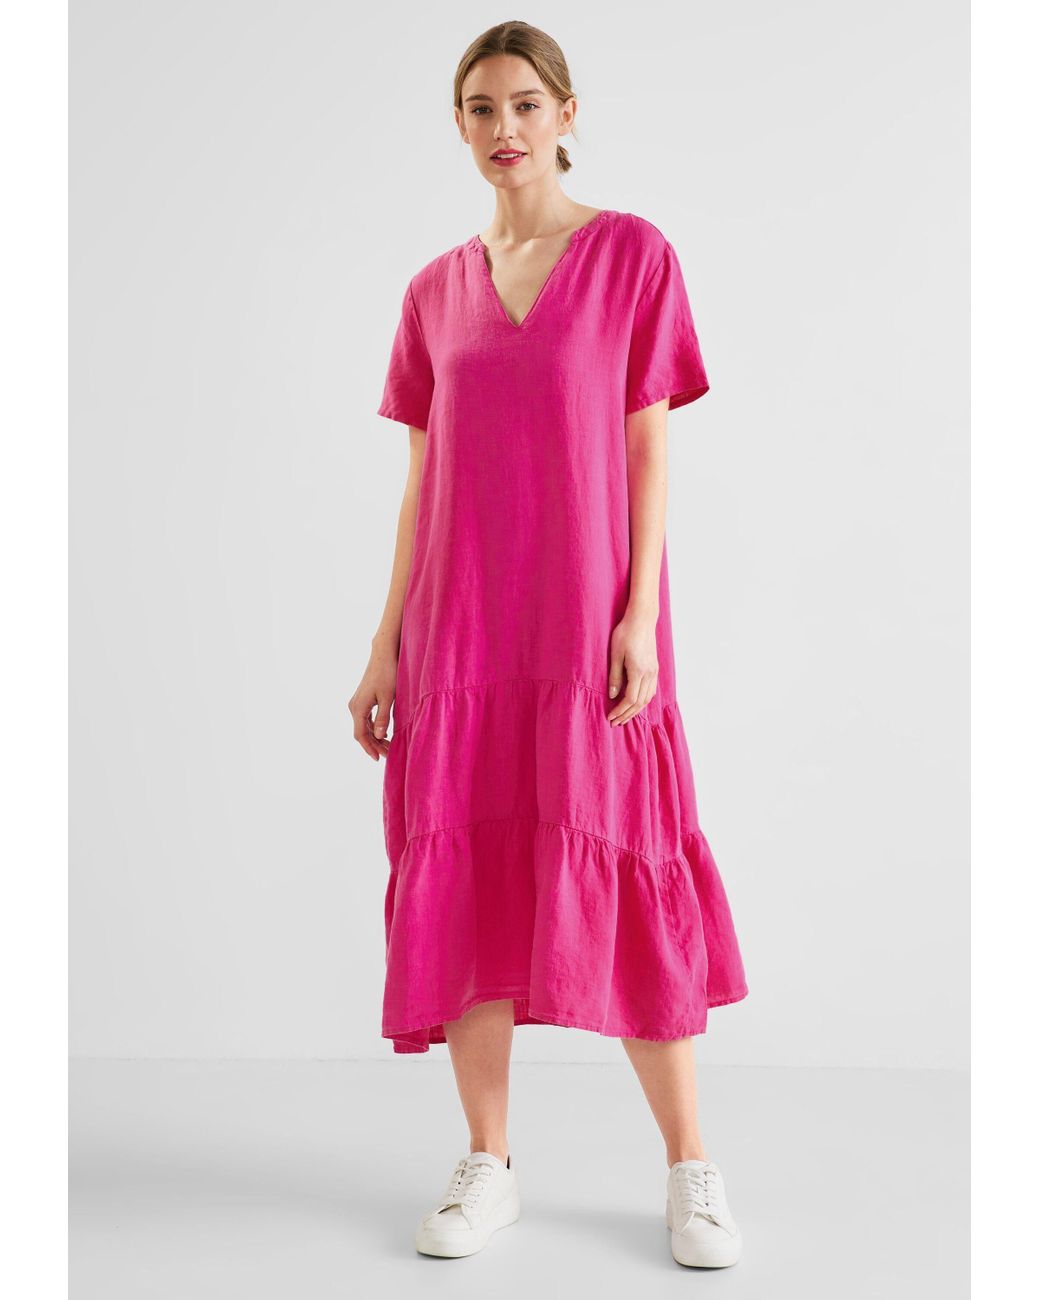 Street Lyst Pink in | Sommerkleid One DE